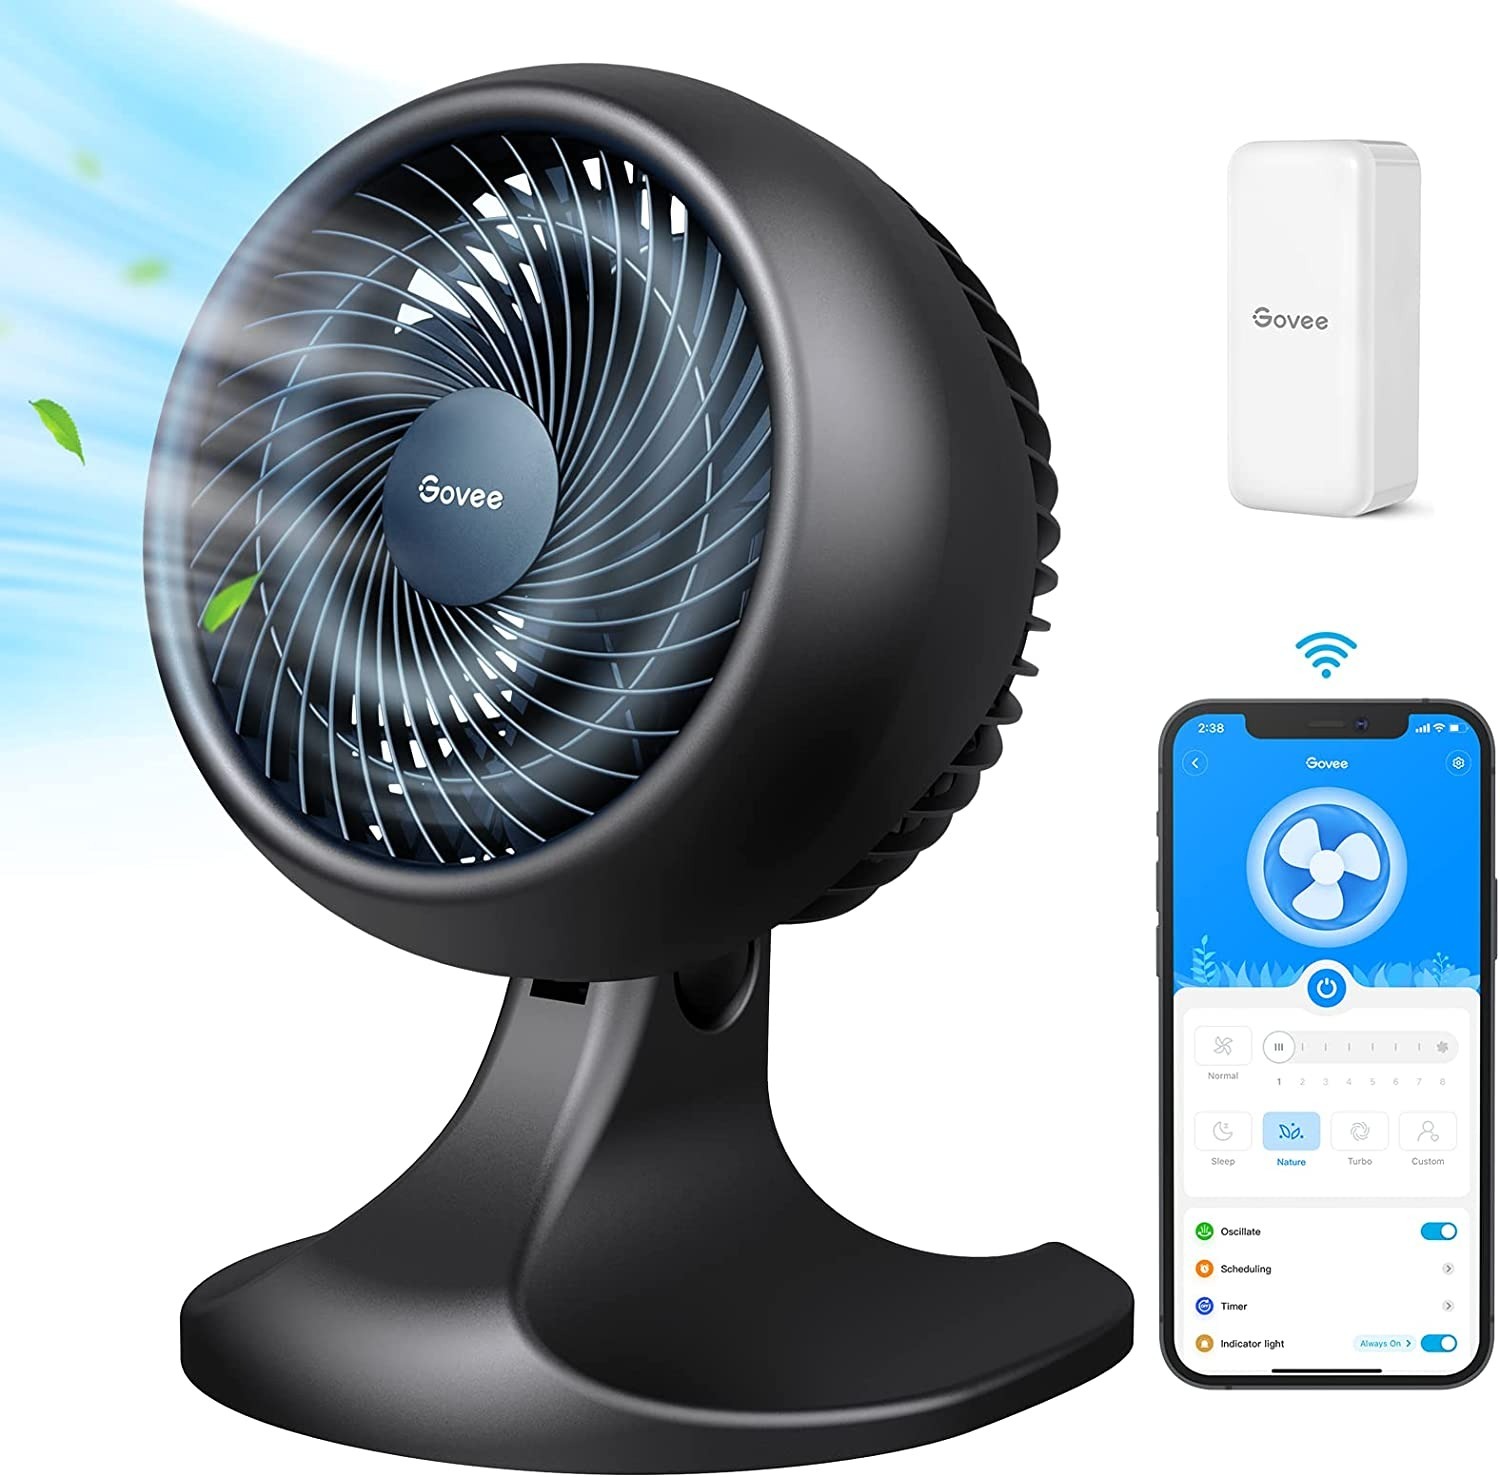 Govee Portable Smart Fan with Smart Control via App & Alexa $40 + Free Shipping